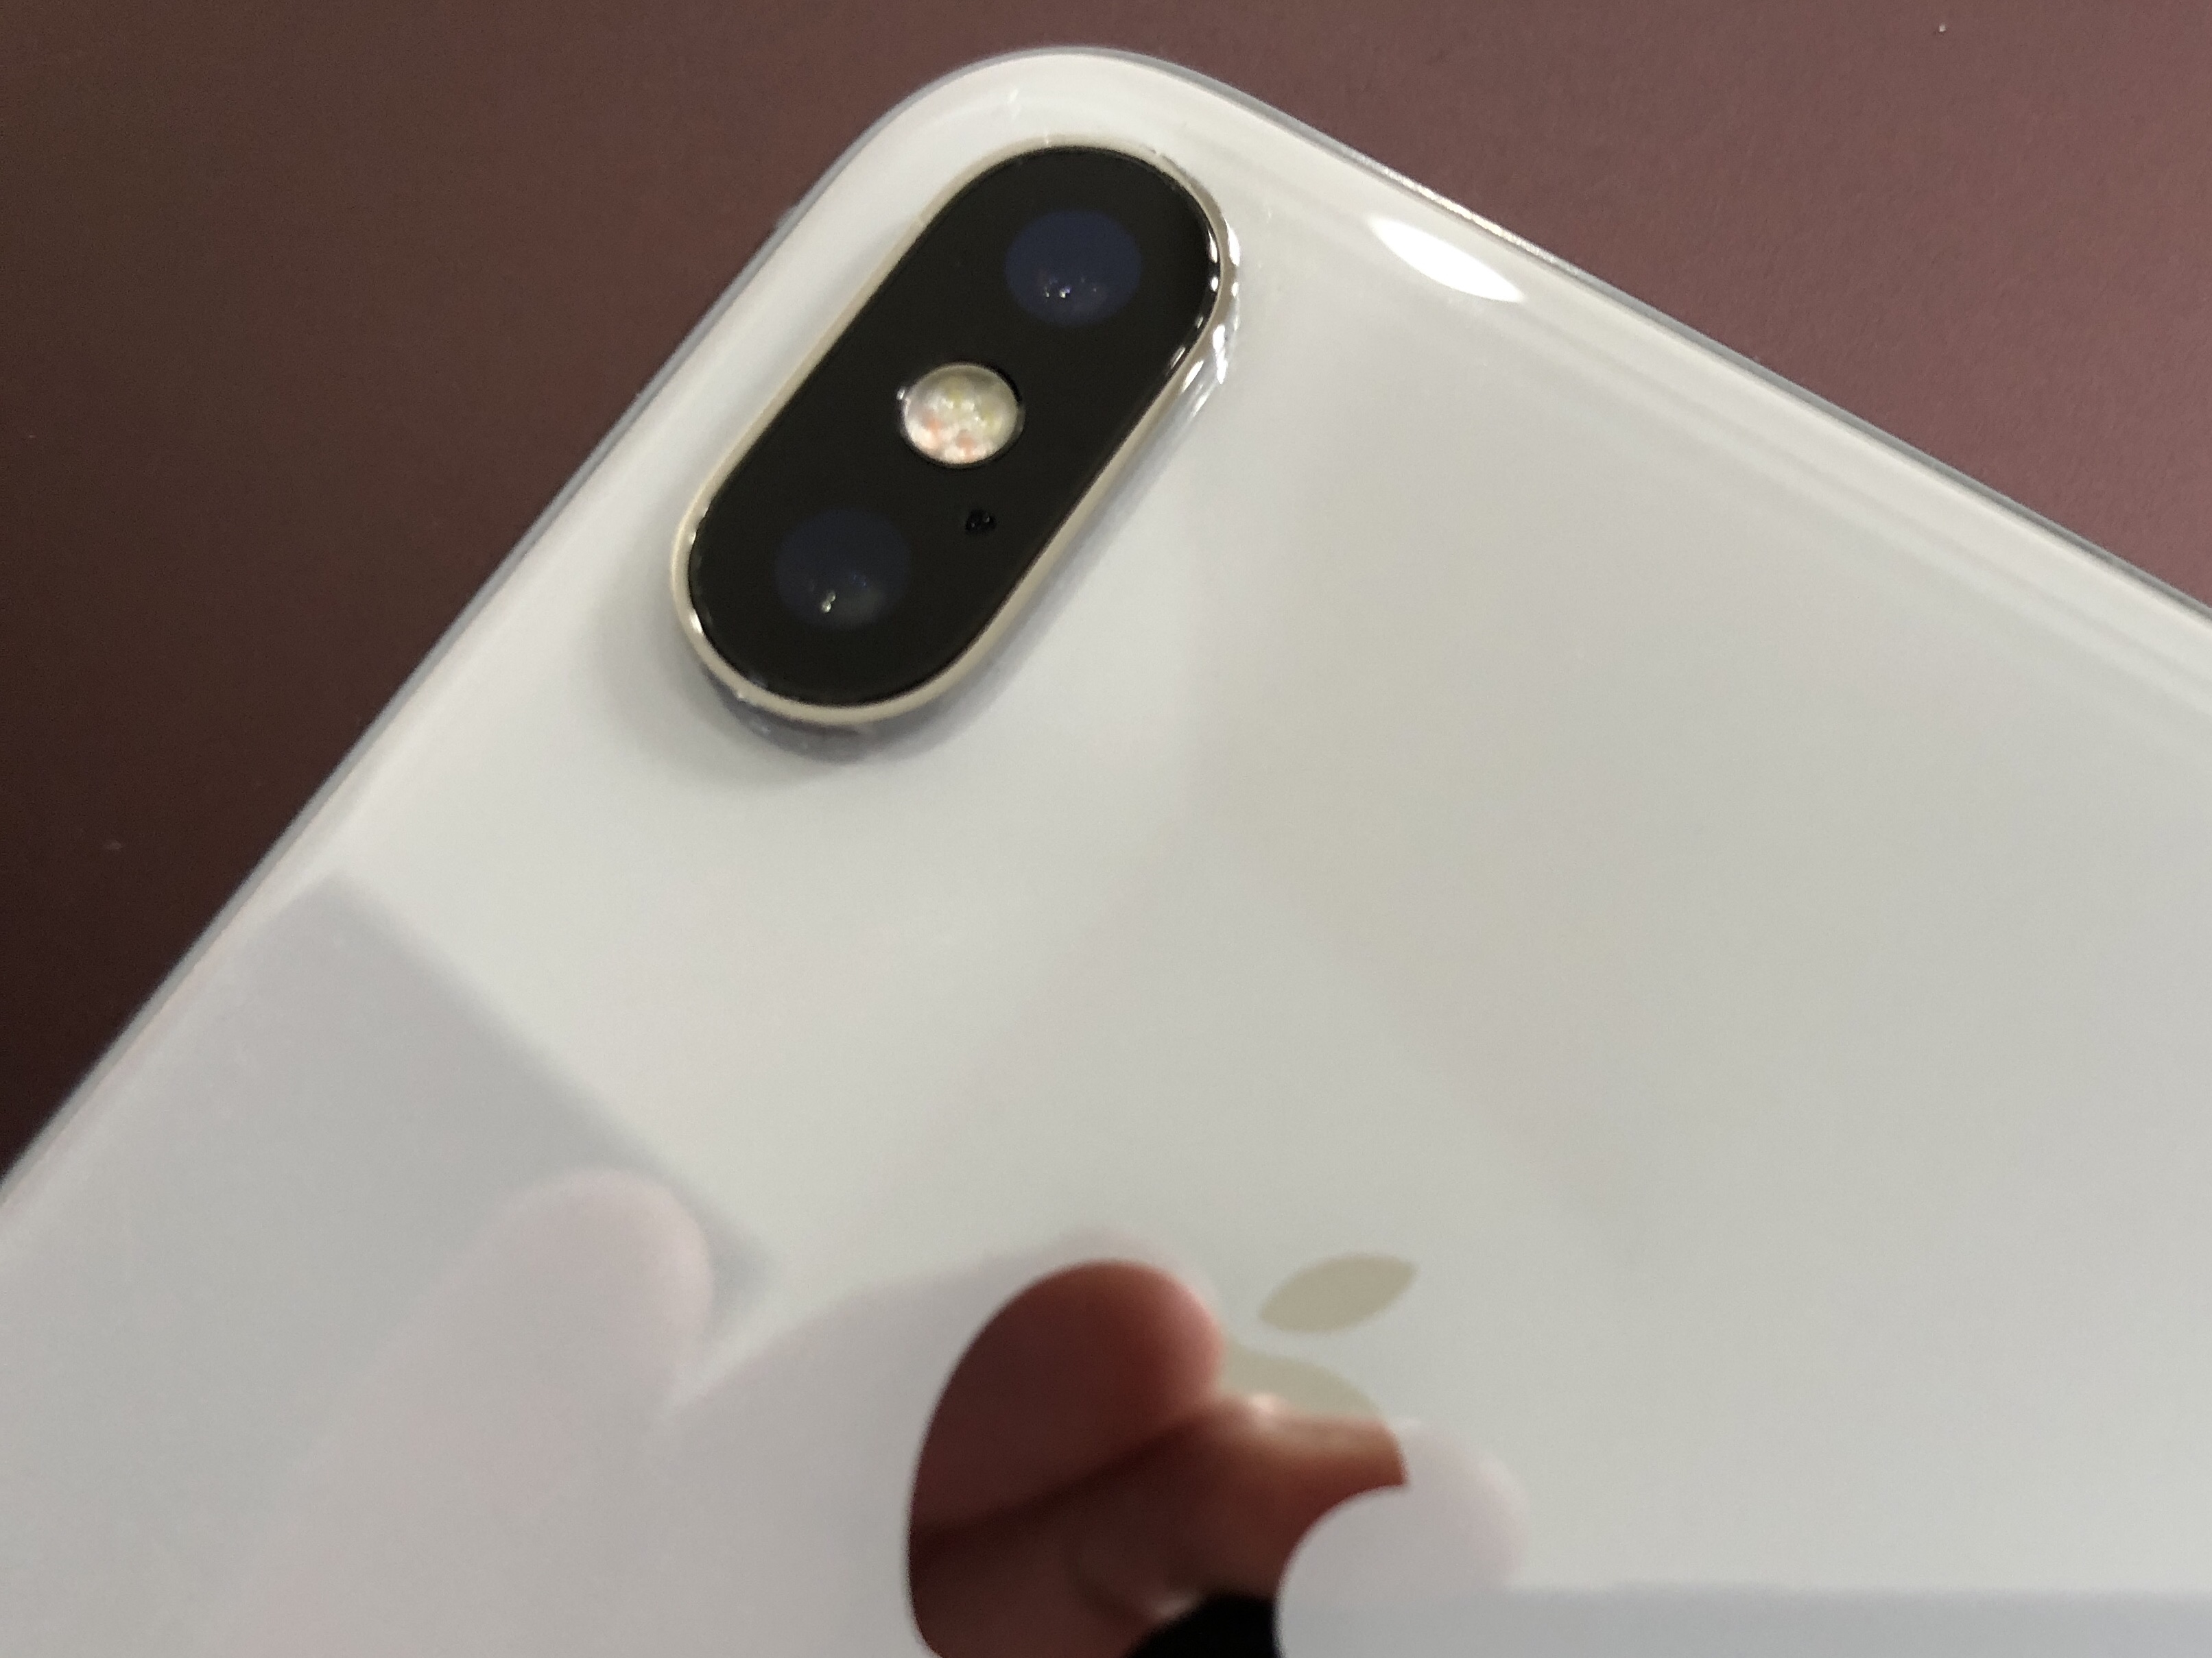 iPhone X har nesten de samme kameraegenskapene som storebror iPhone 8 Plus.